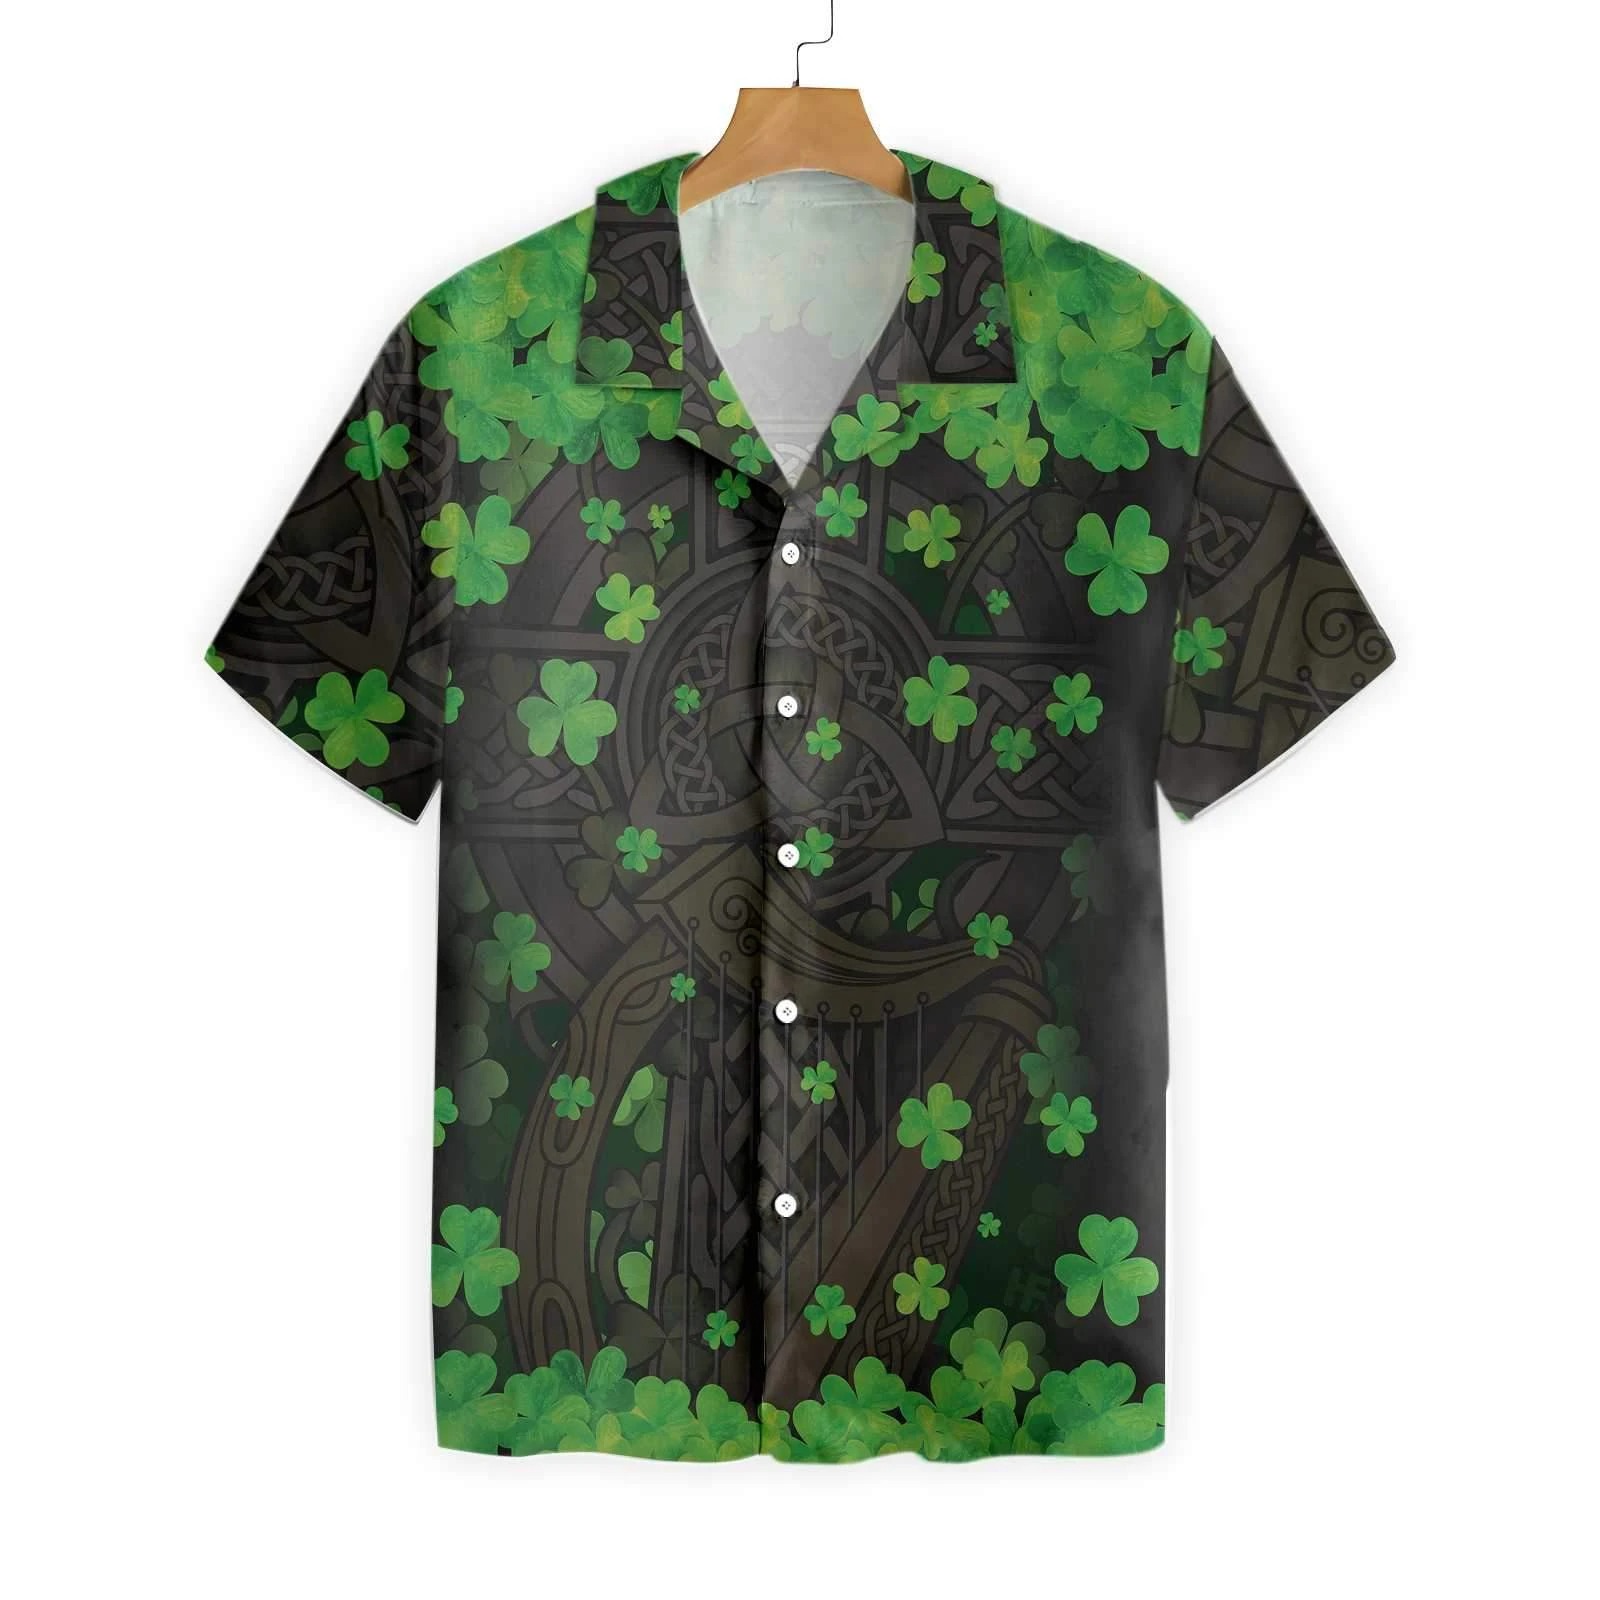 [LIMITED EDITION] The Celtic Cross Harp Irish Hawaiian shirt